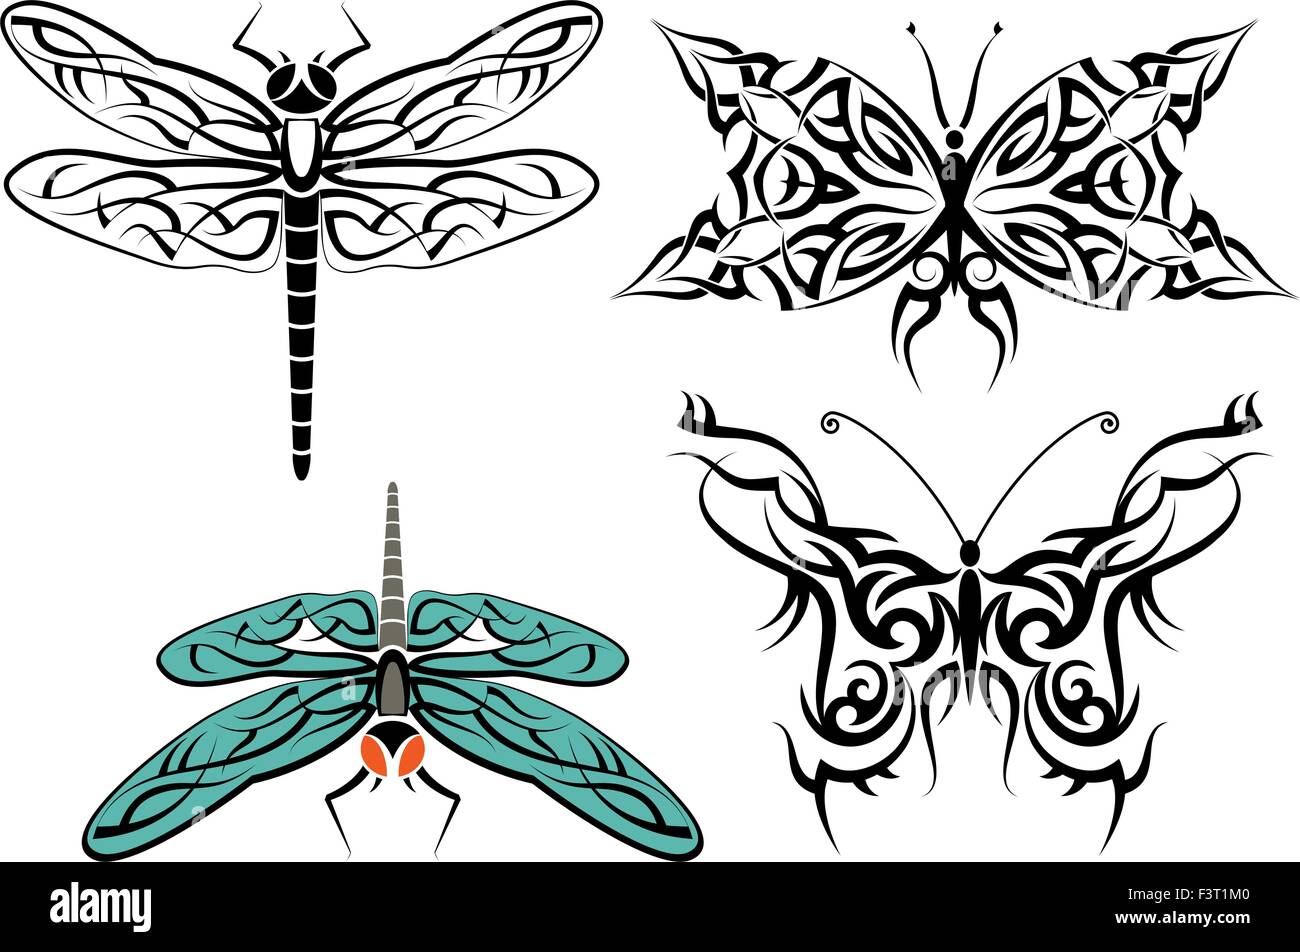 Tattoo Dragonfly Design Vector Art Stock Vector